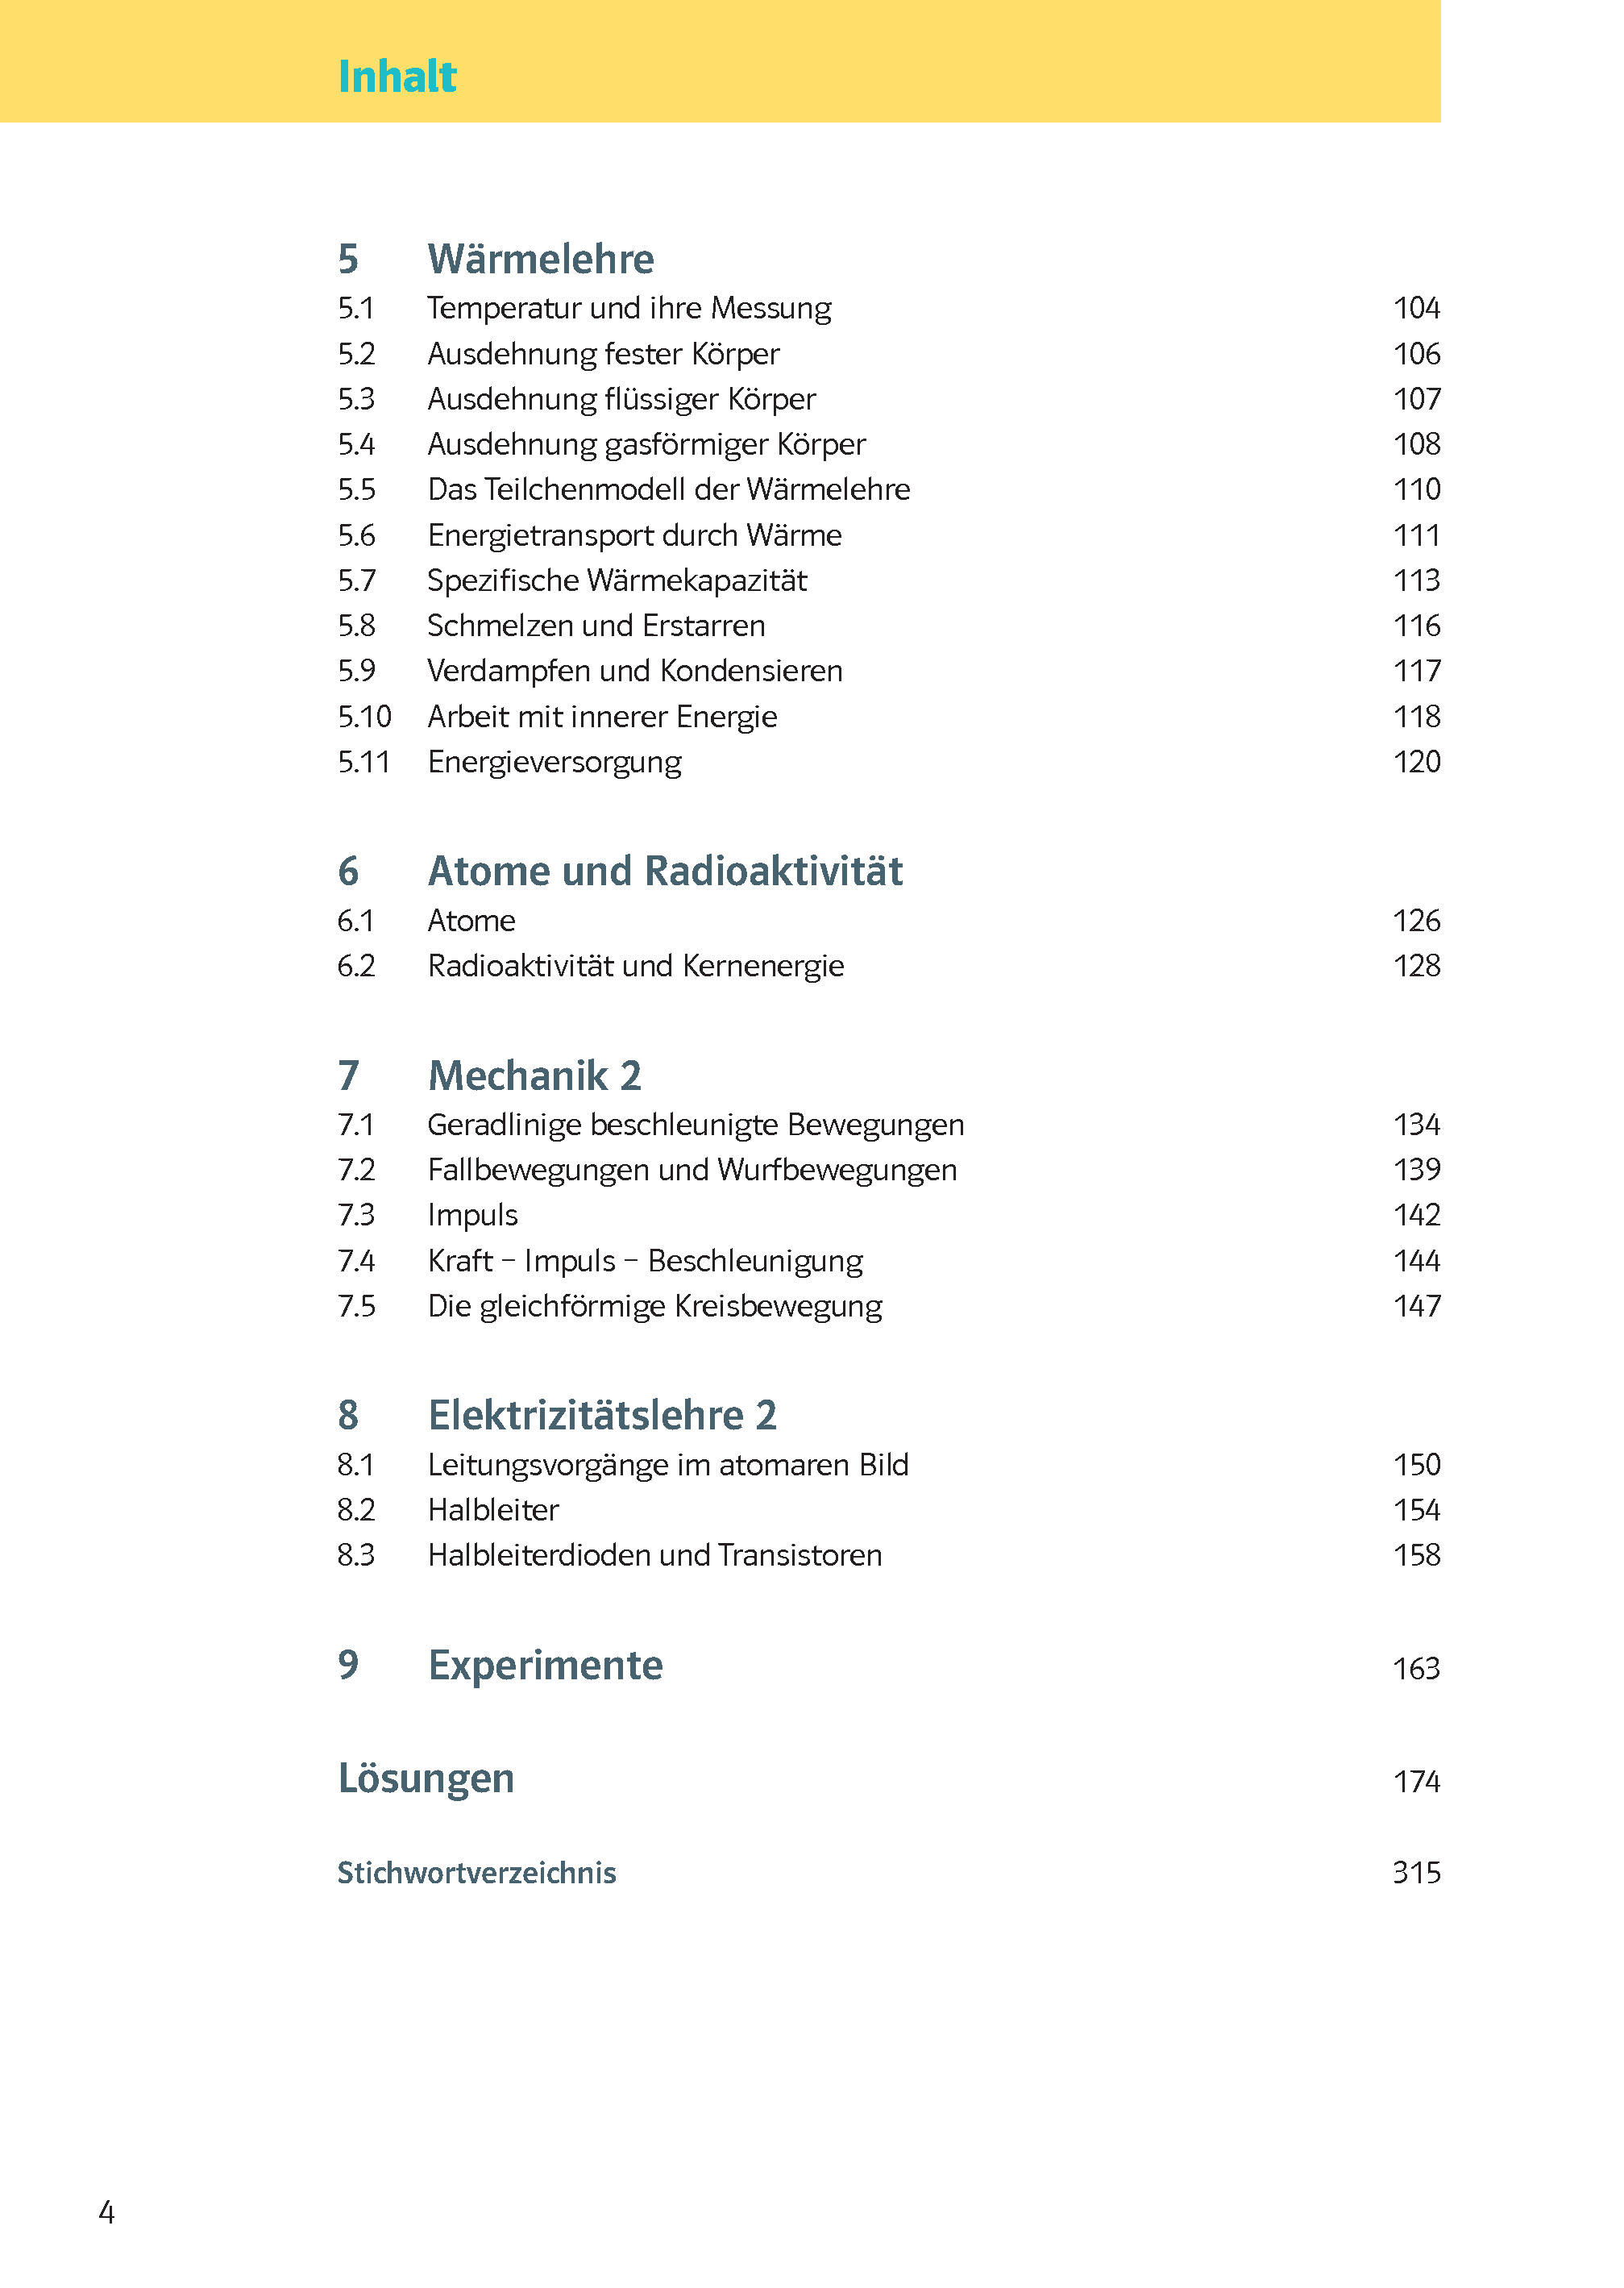 Klett KomplettTrainer Gymnasium Physik 7.-10. Klasse